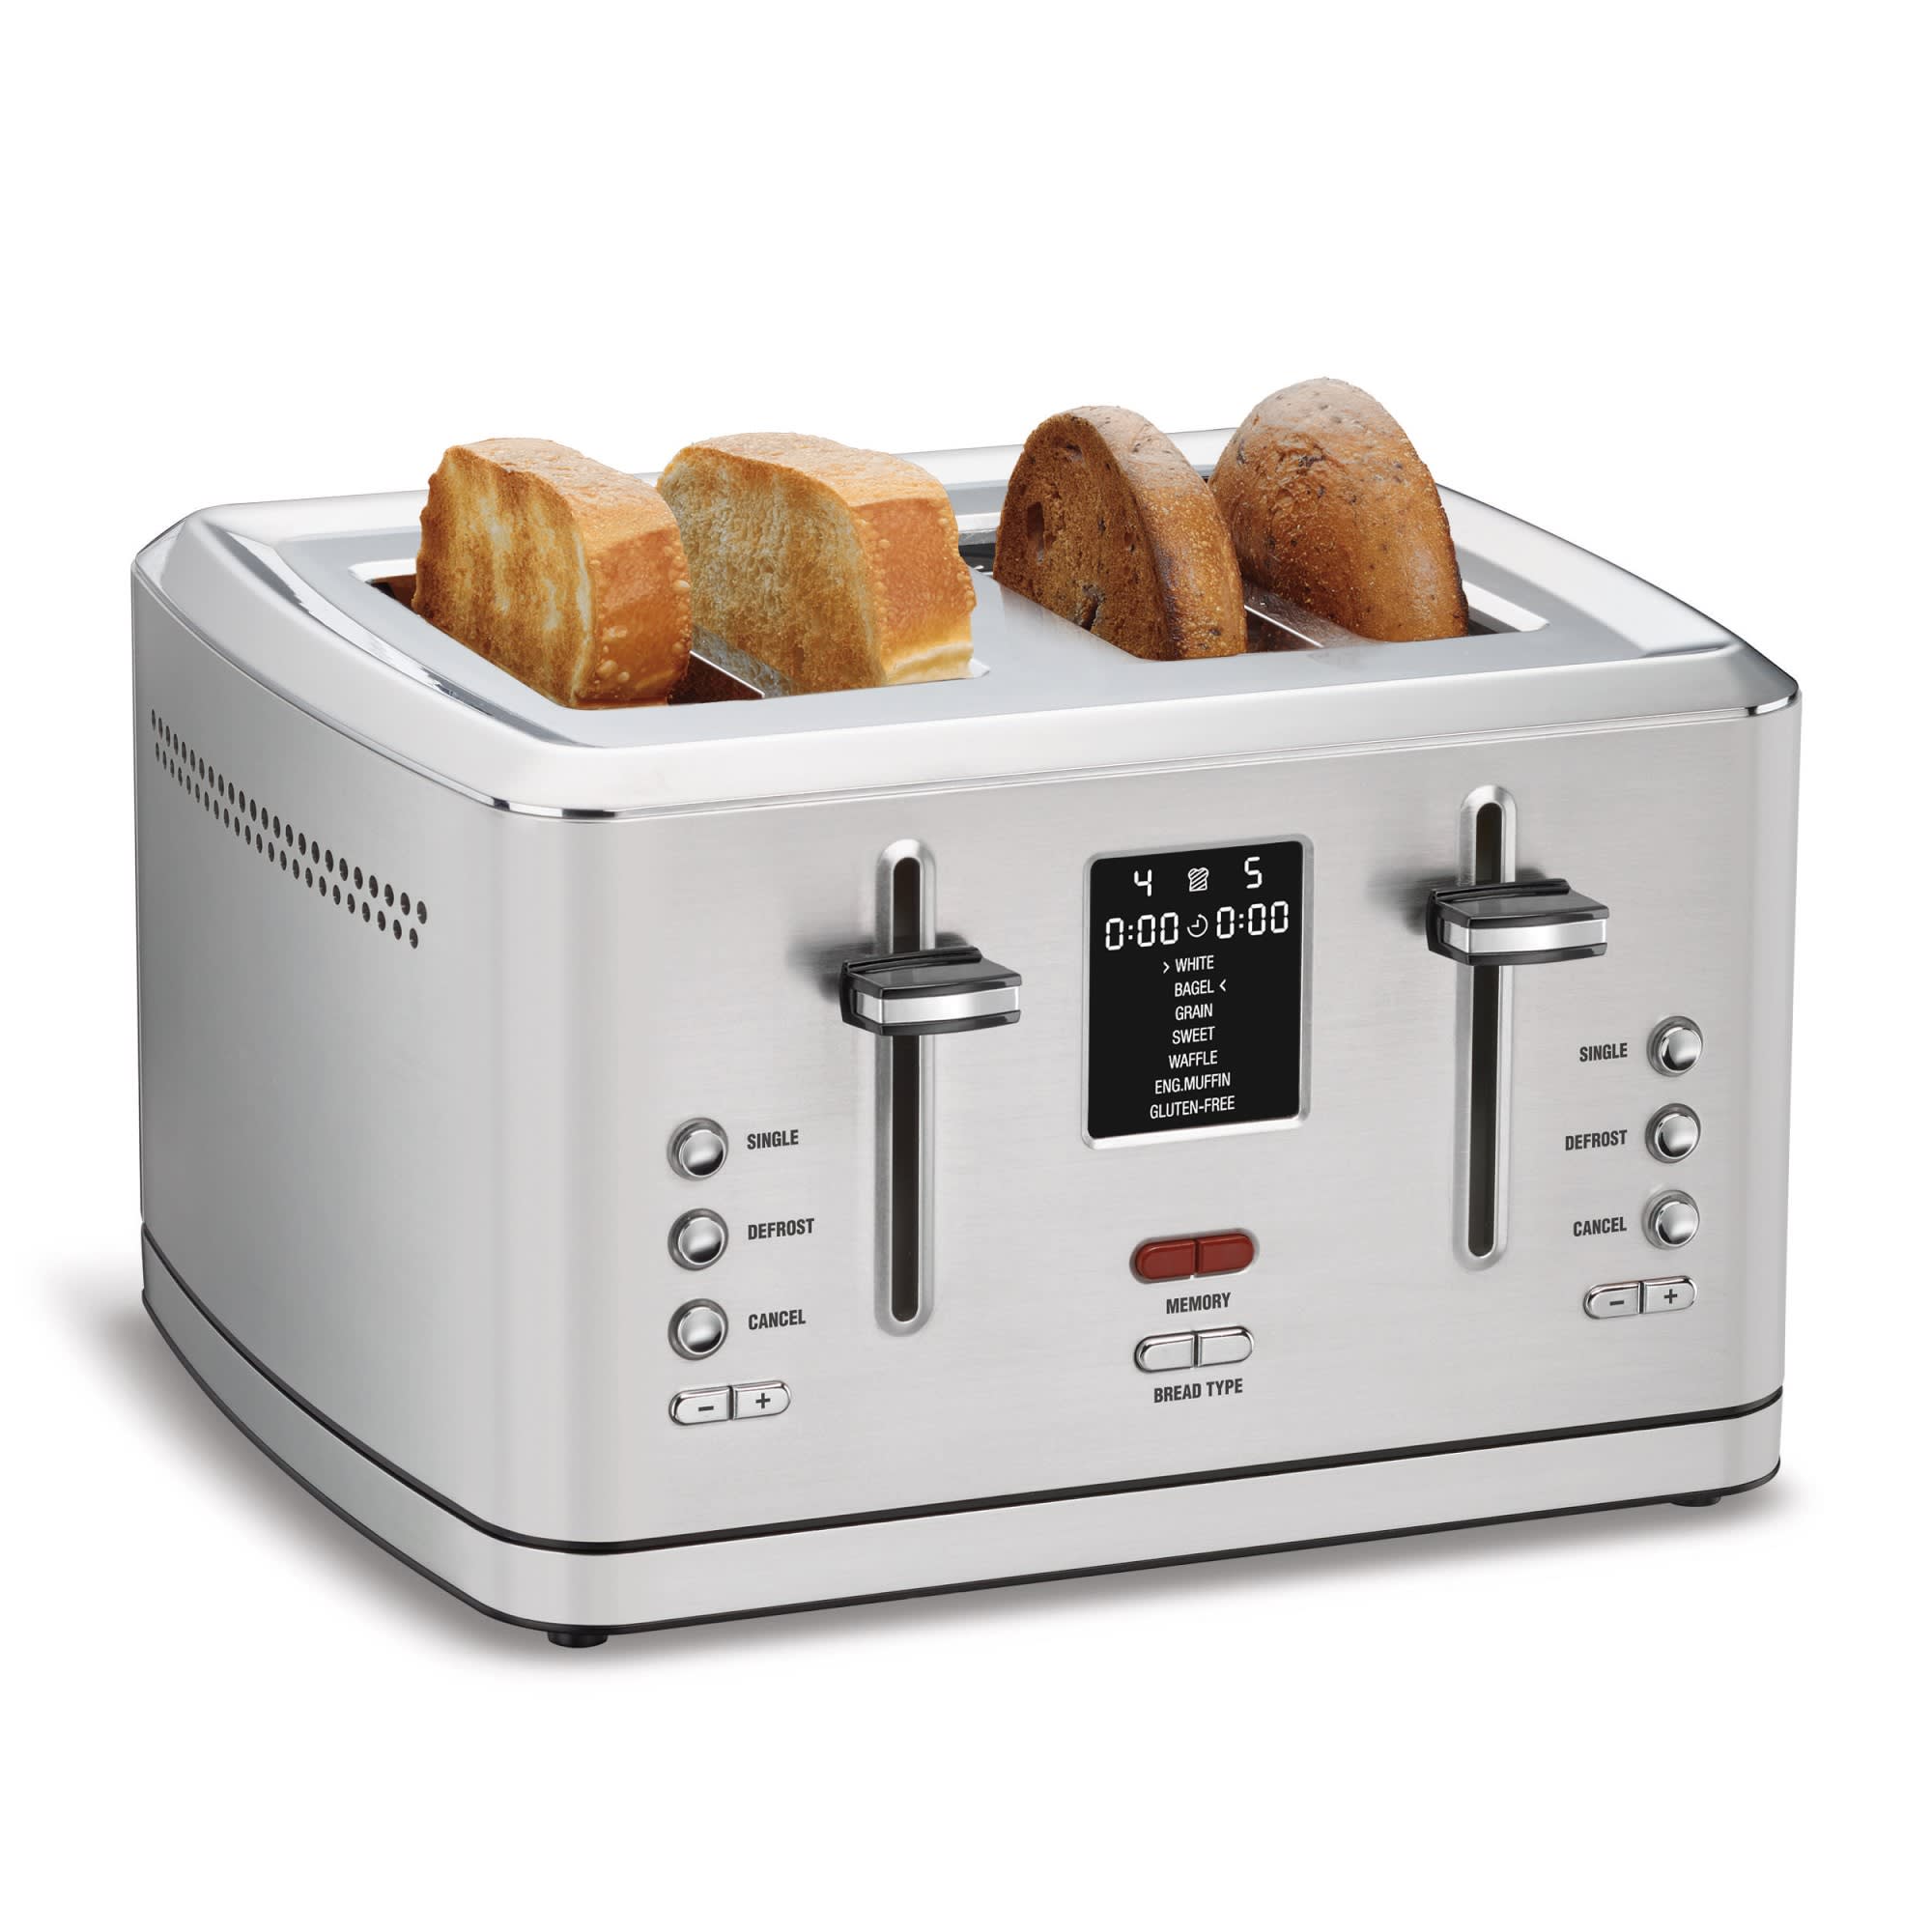 Faberware 4 slice digital toaster